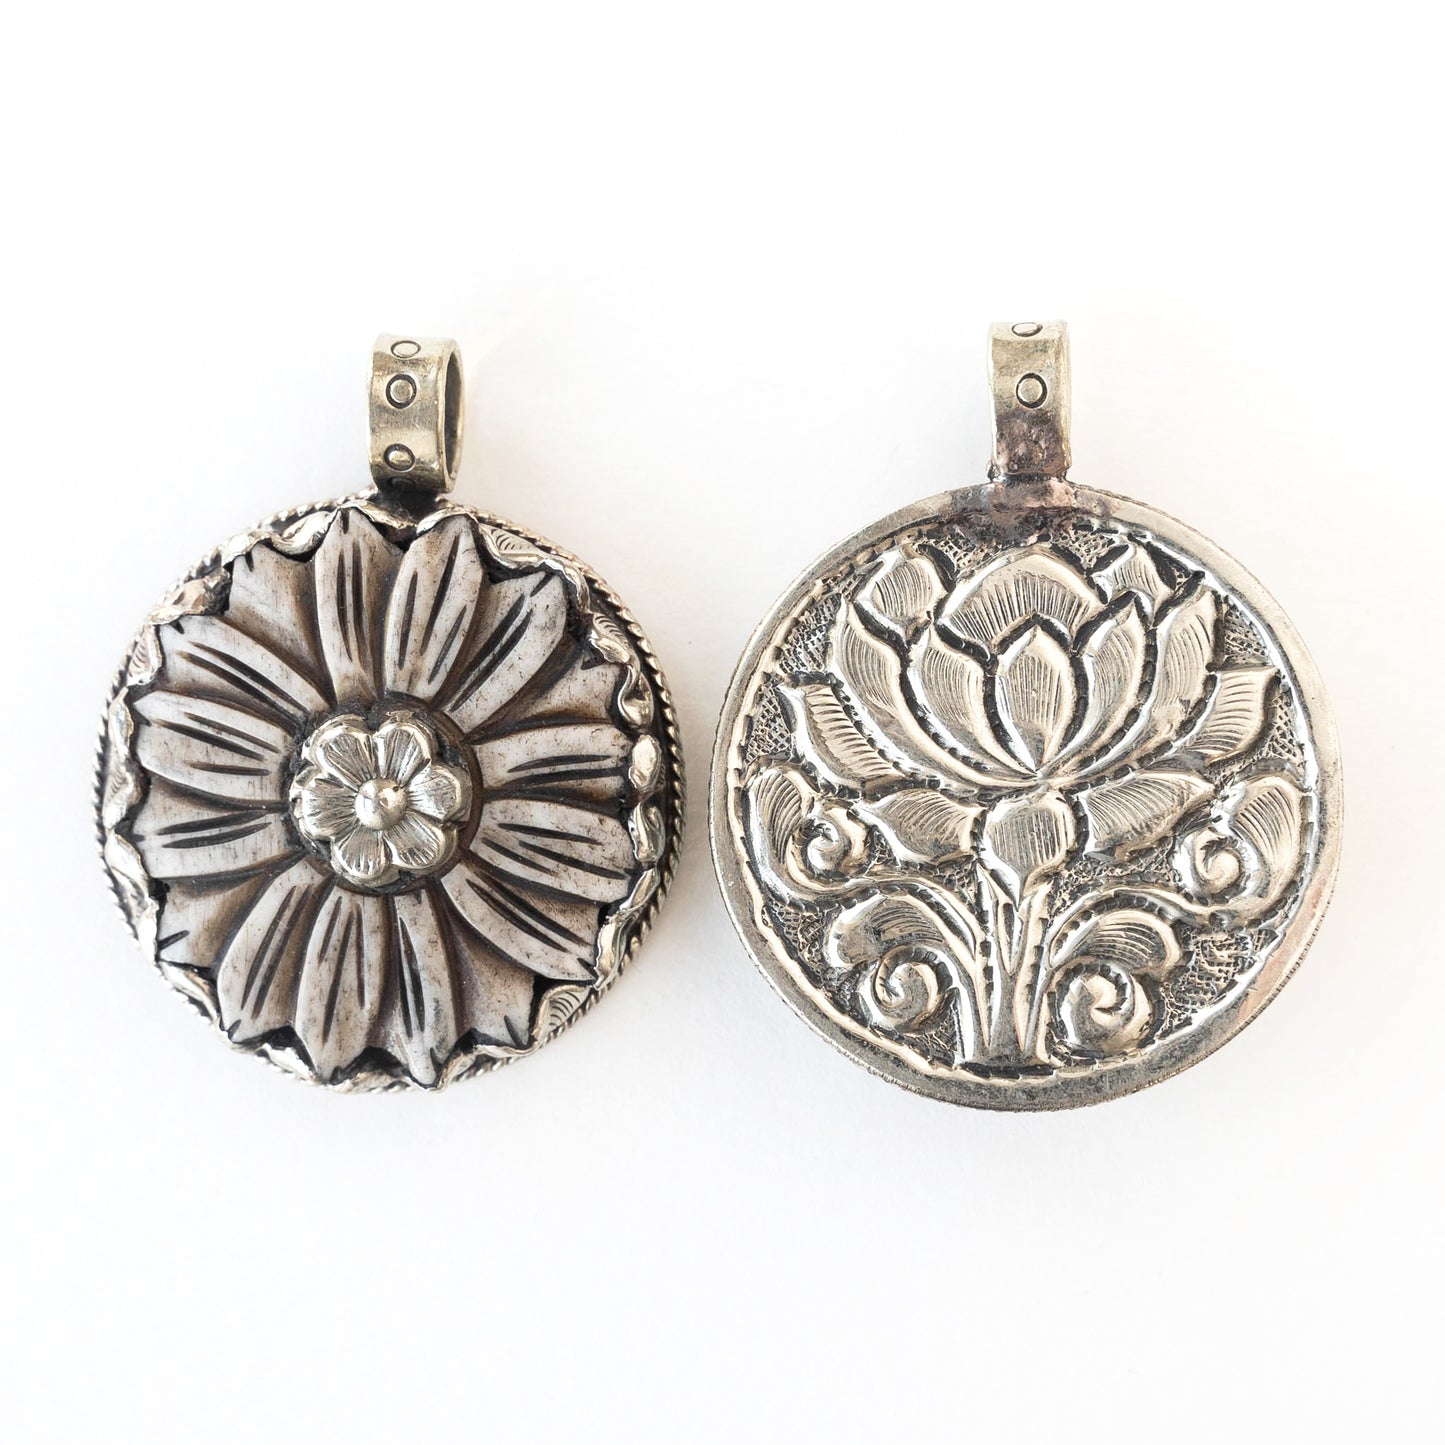 39mm Carved Flower Pendant set in Tibetan Silver - 1 piece